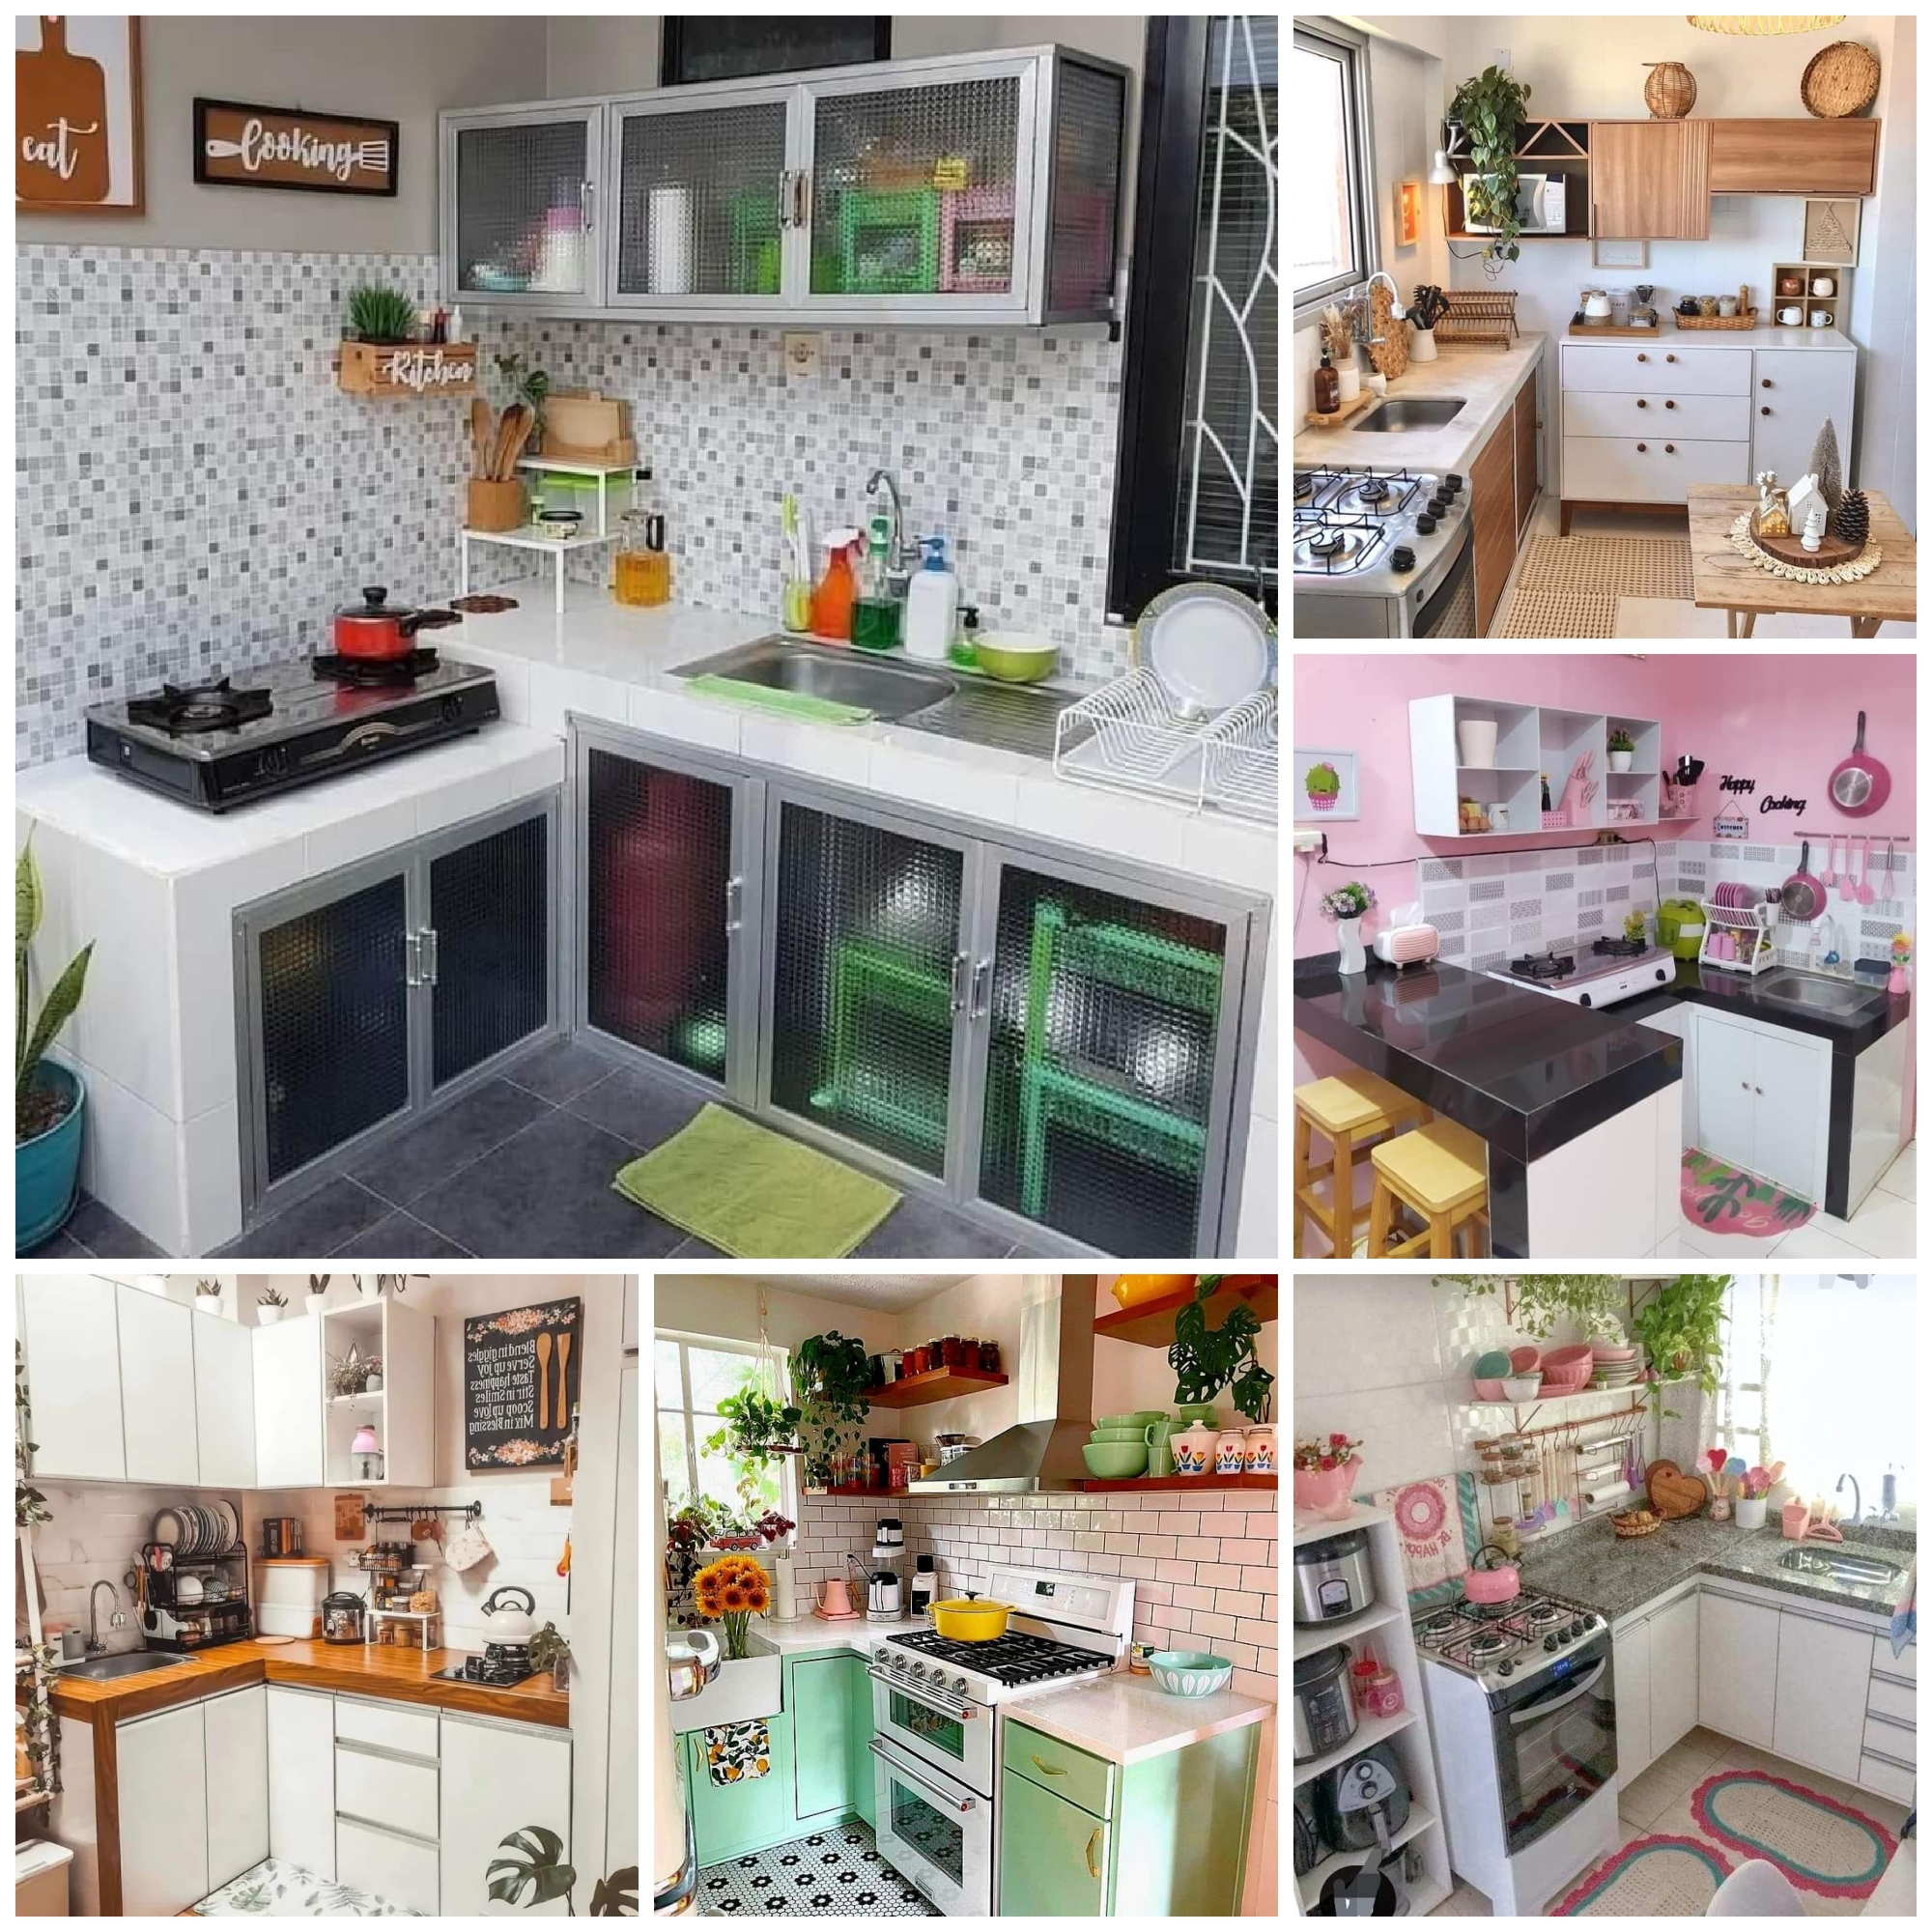 Best Small Kitchen Design Ideas – Small Kitchen Layout Photos